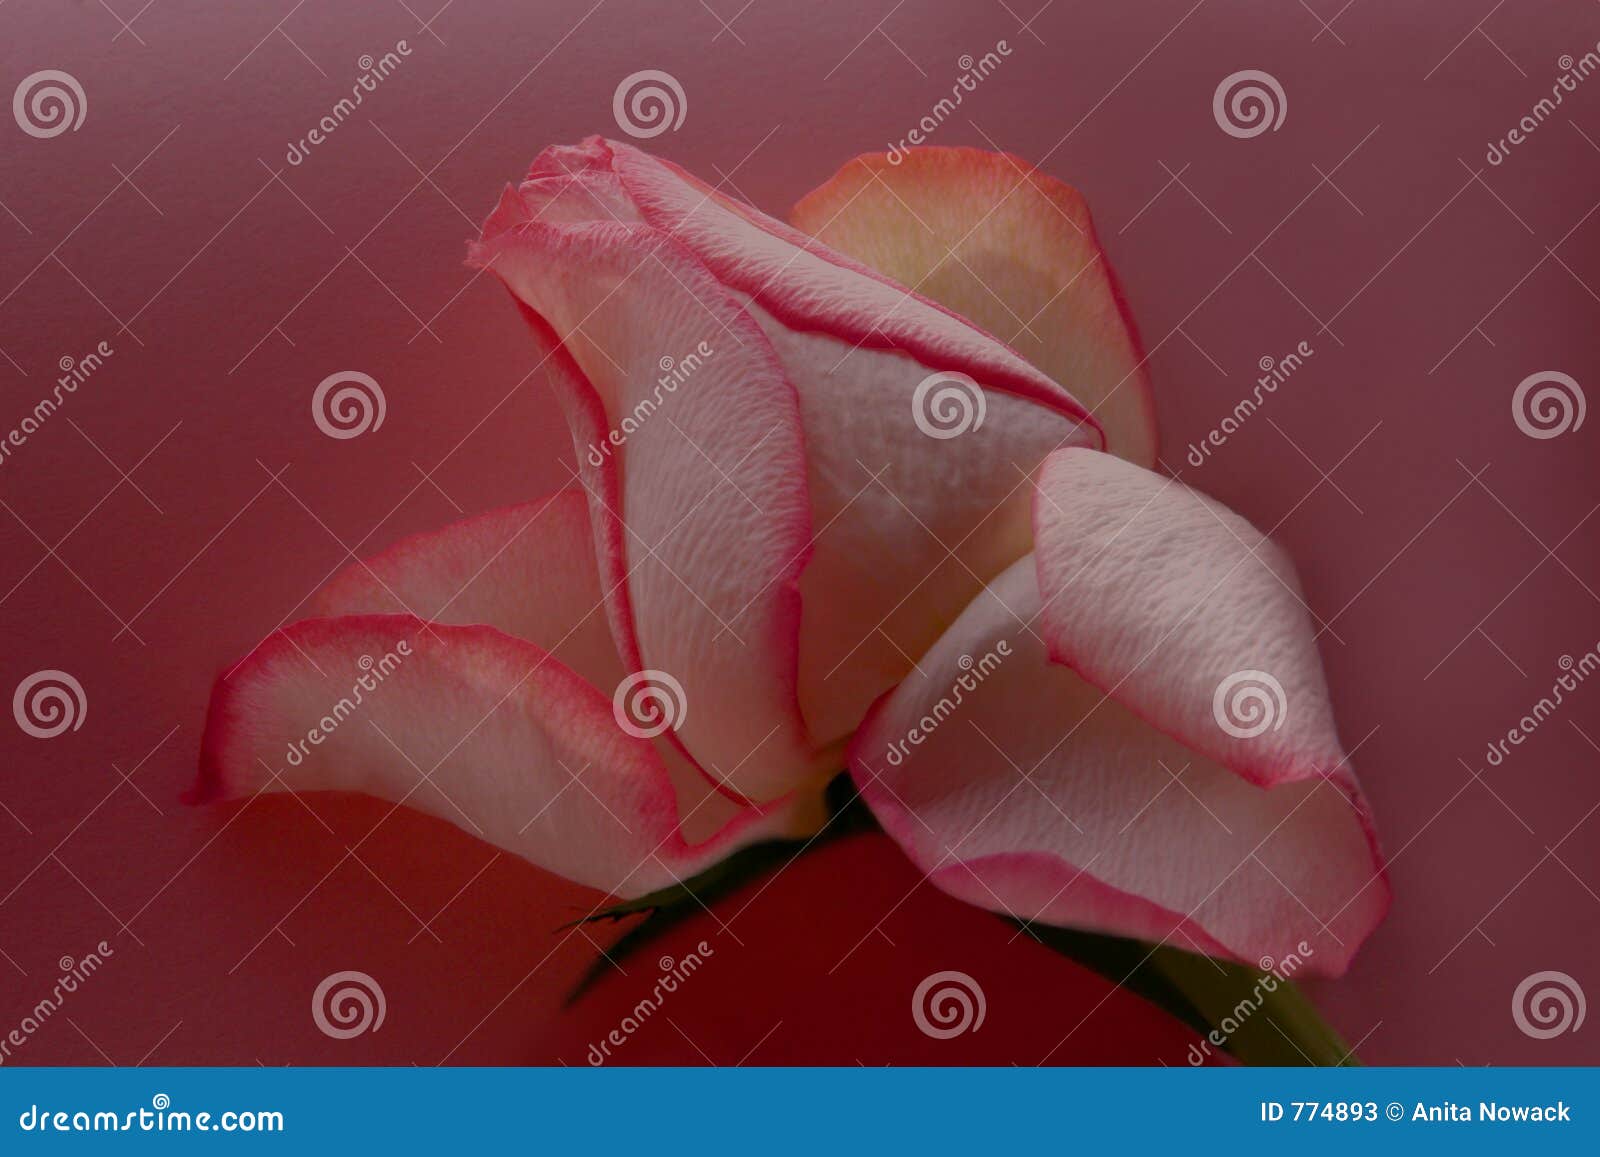 mauve rose